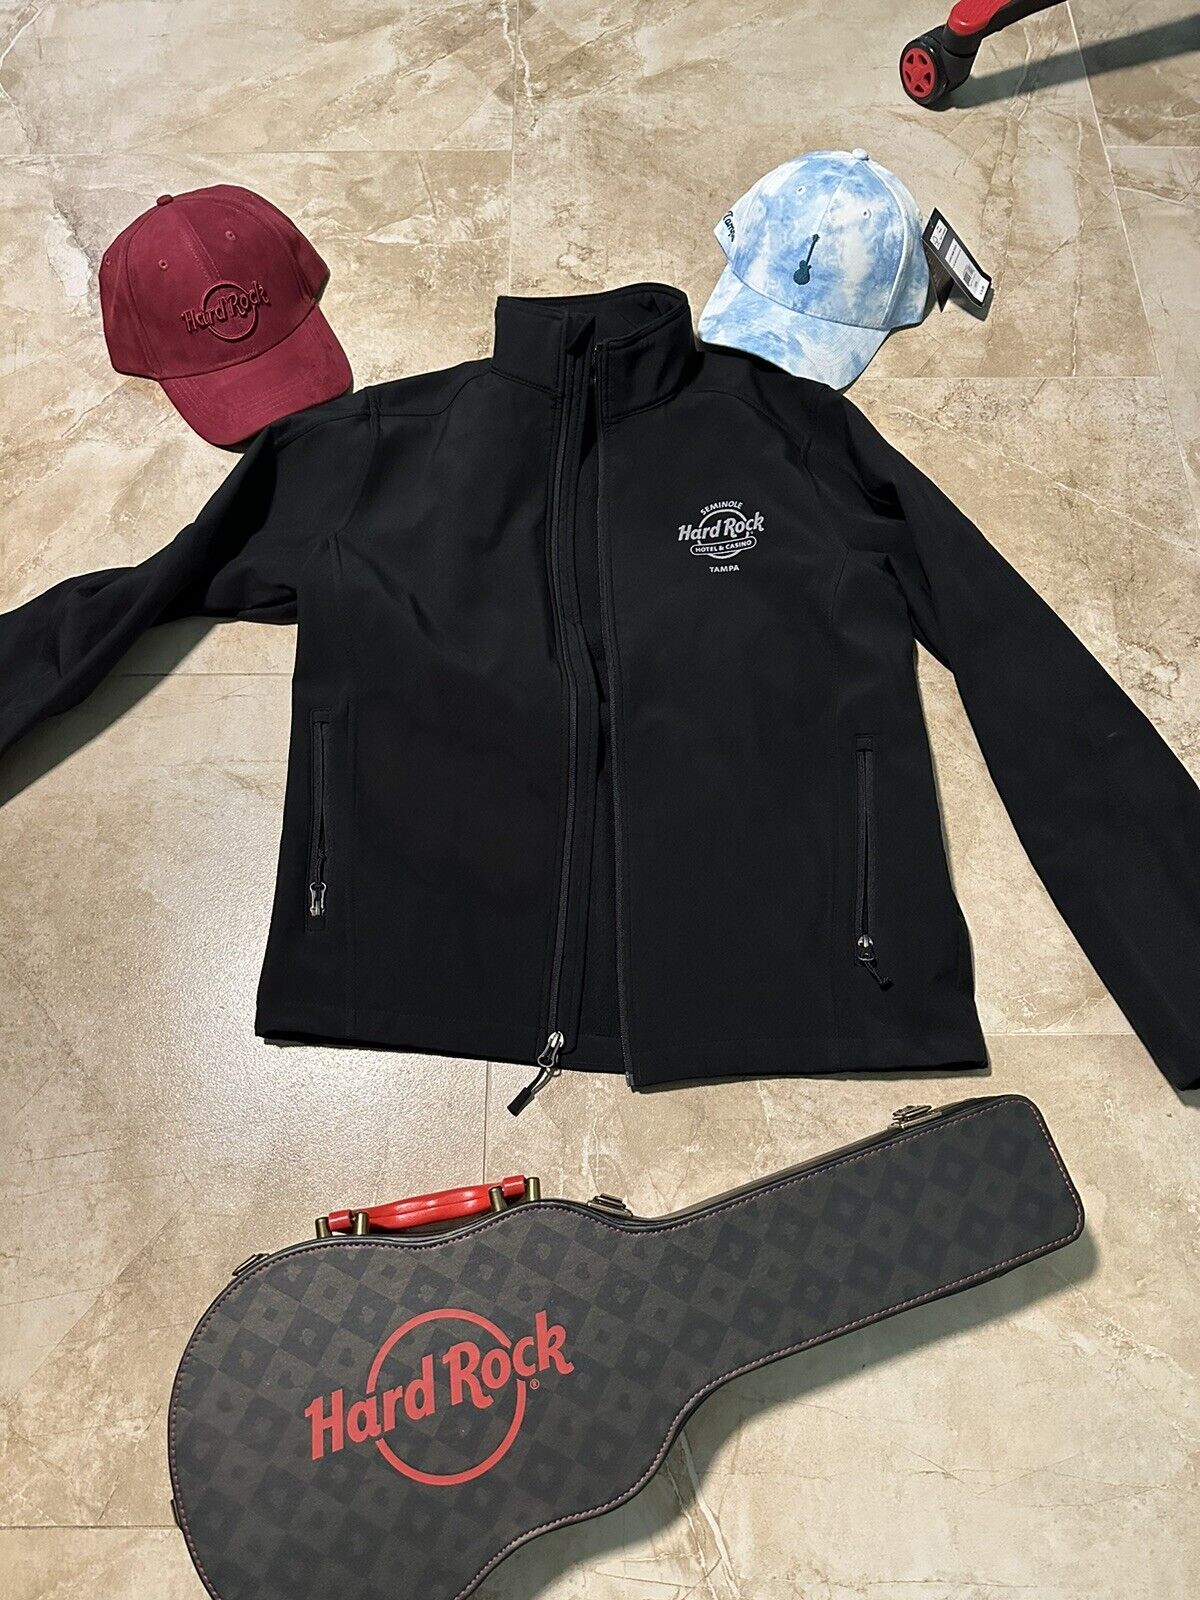 Hard Rock Poker Set, Hard Rock Jacket, Hard Rock Hats